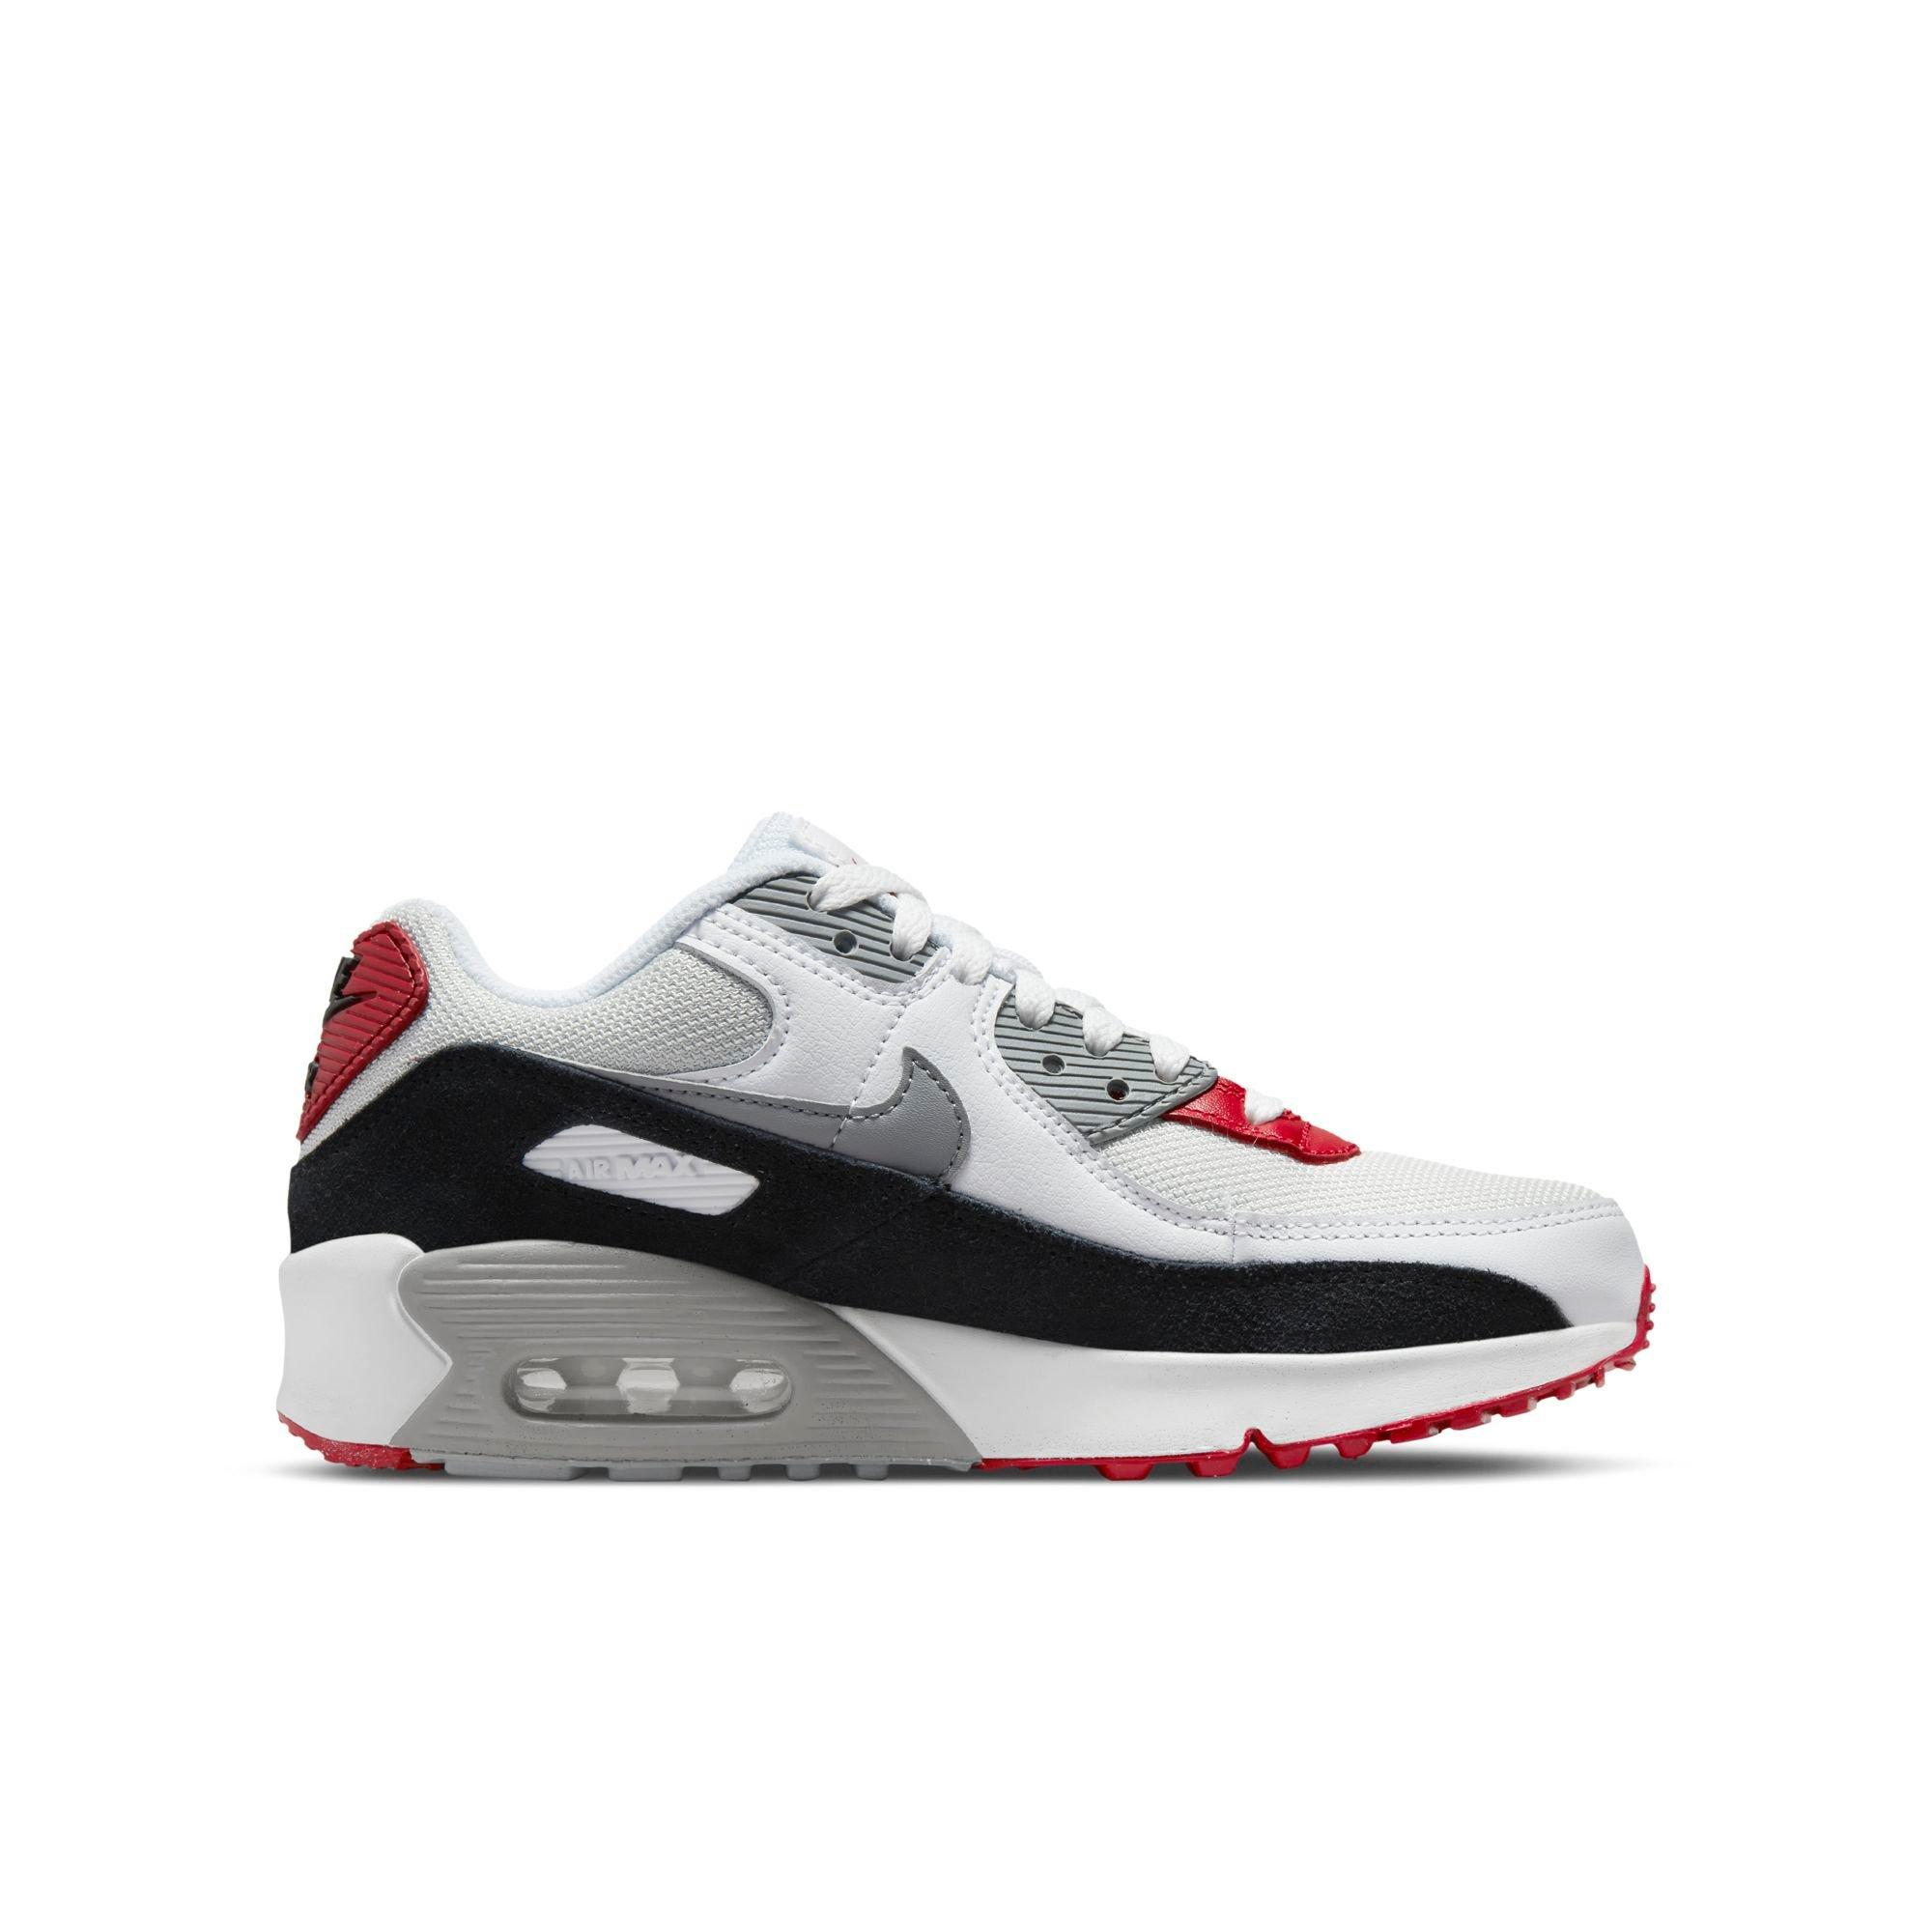 Nike Max 90 LTR "Photon Dust/Particle Grey/Varsity Red" Grade School Boys' Shoe